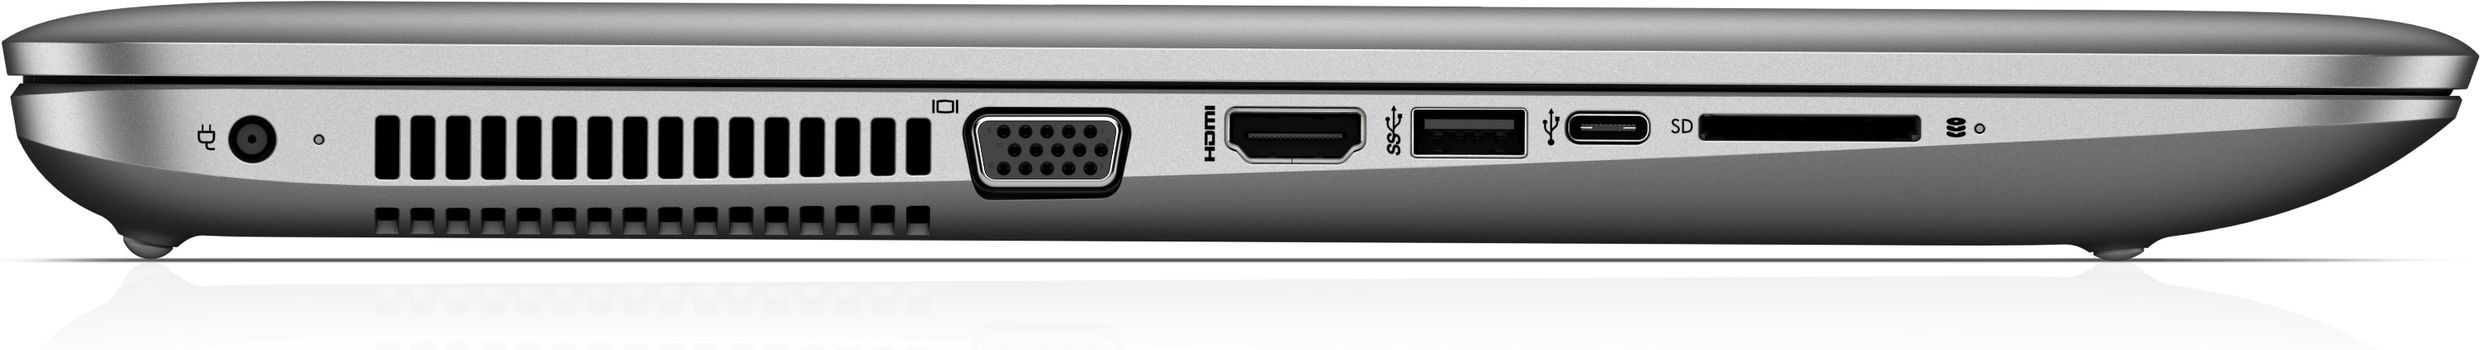 HP ProBook 470 G4 i7-7500U 17.3 FHD AG LED UWVA DSC 8GB DDR4 RAM